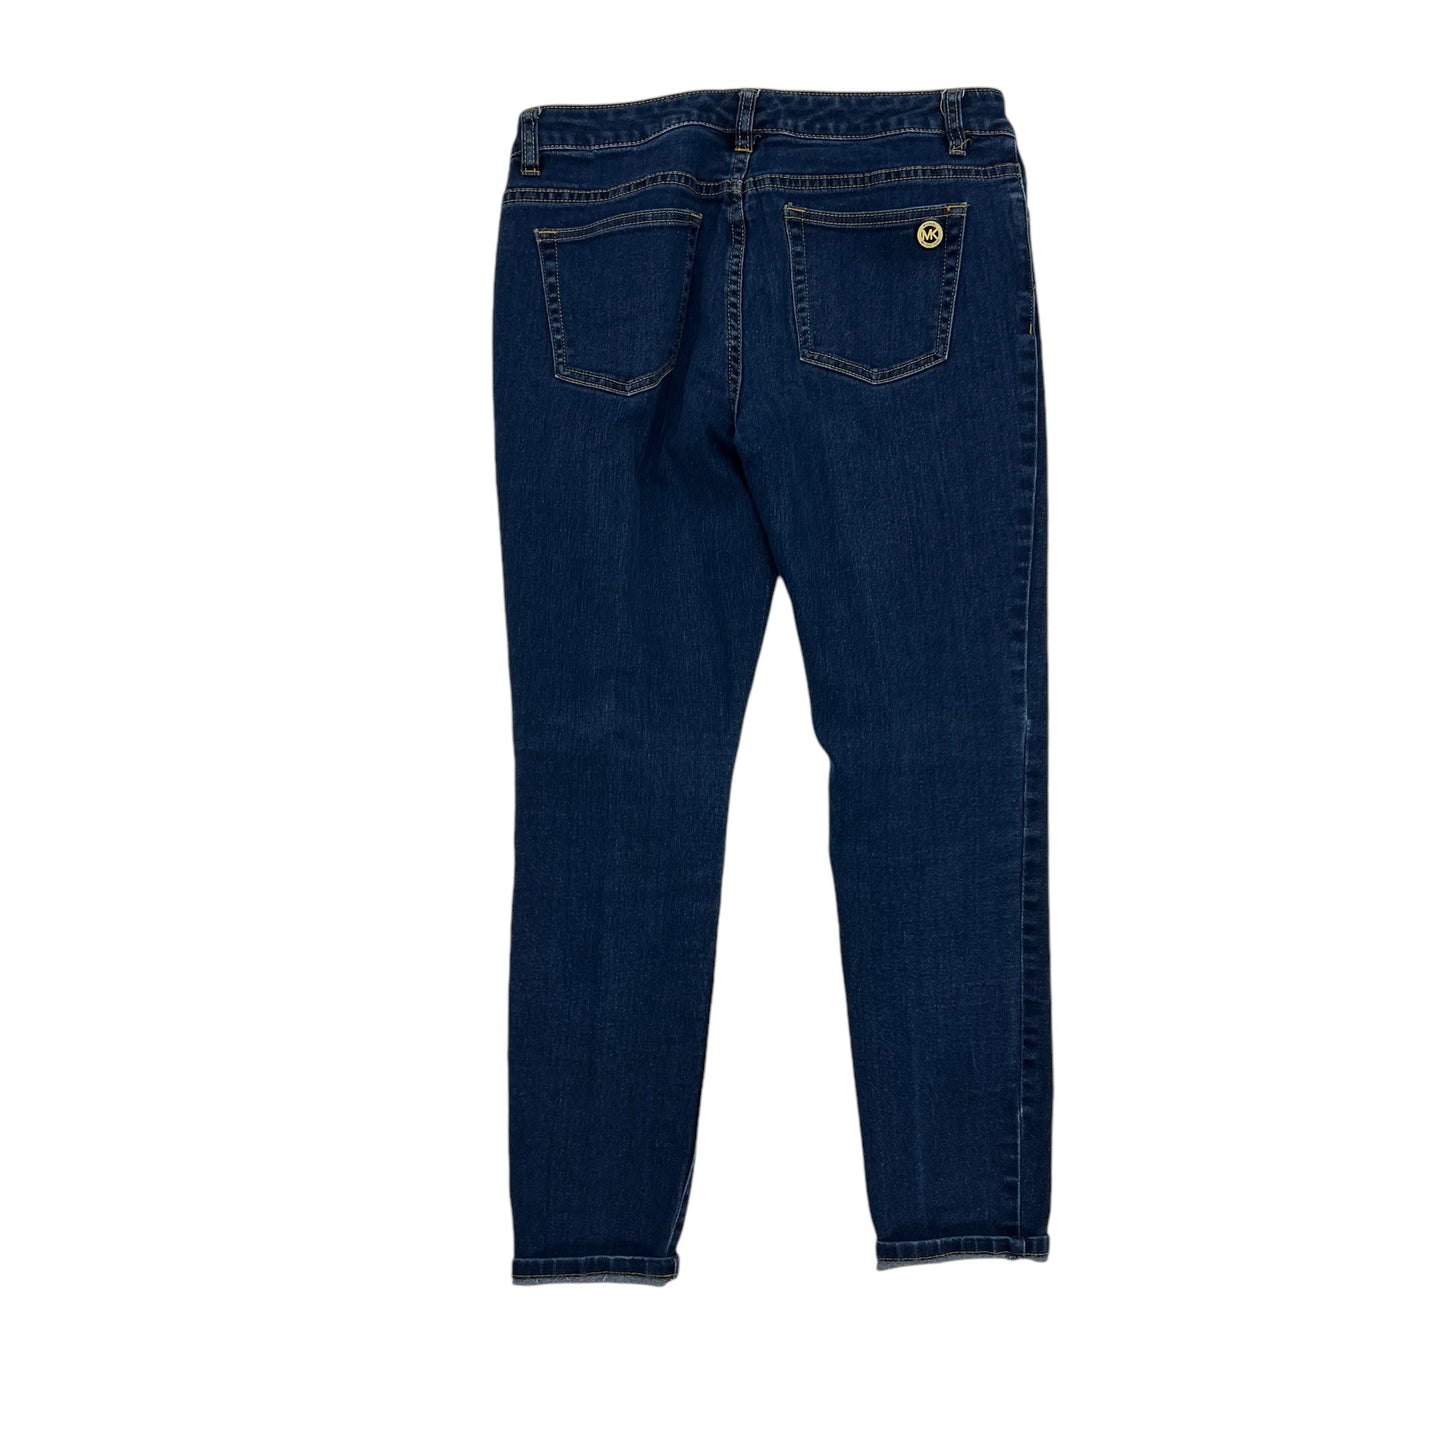 Jeans Designer By Michael Kors  Size: 8